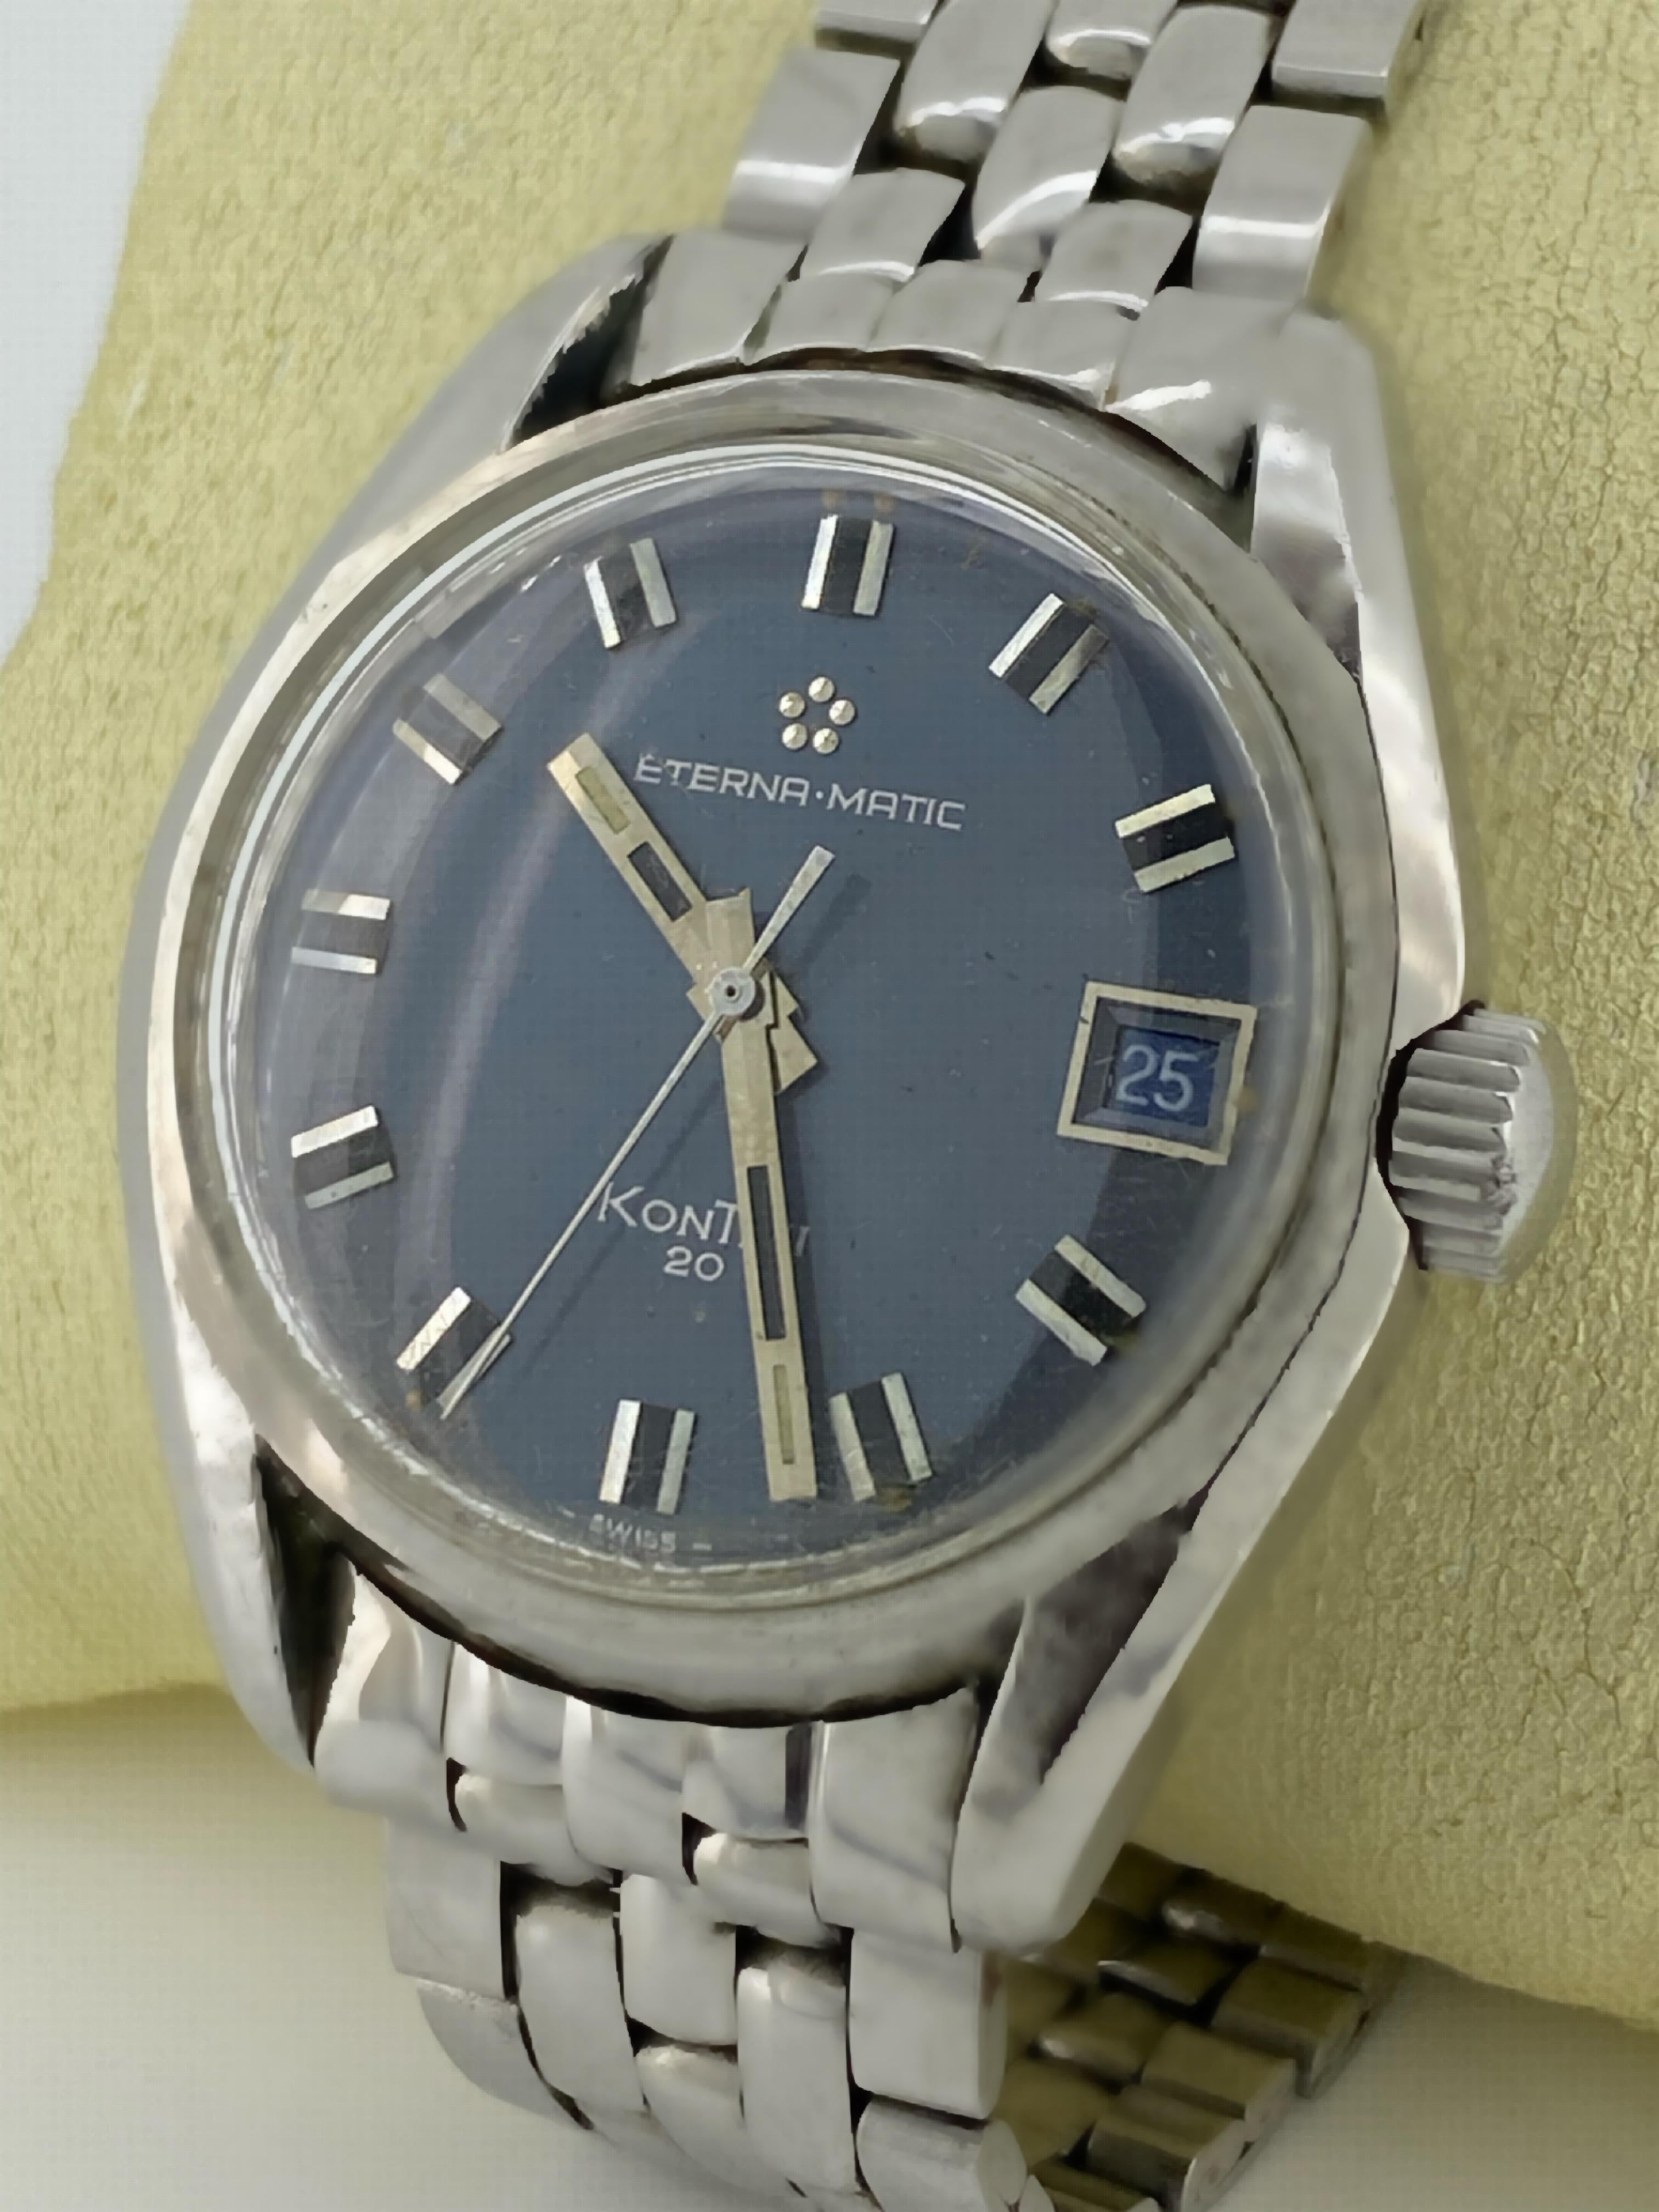 Retro Eterna-matic KonTiki 20 c1968 Automatic Watch, Gay Freres Eterna Bracelet + Box For Sale